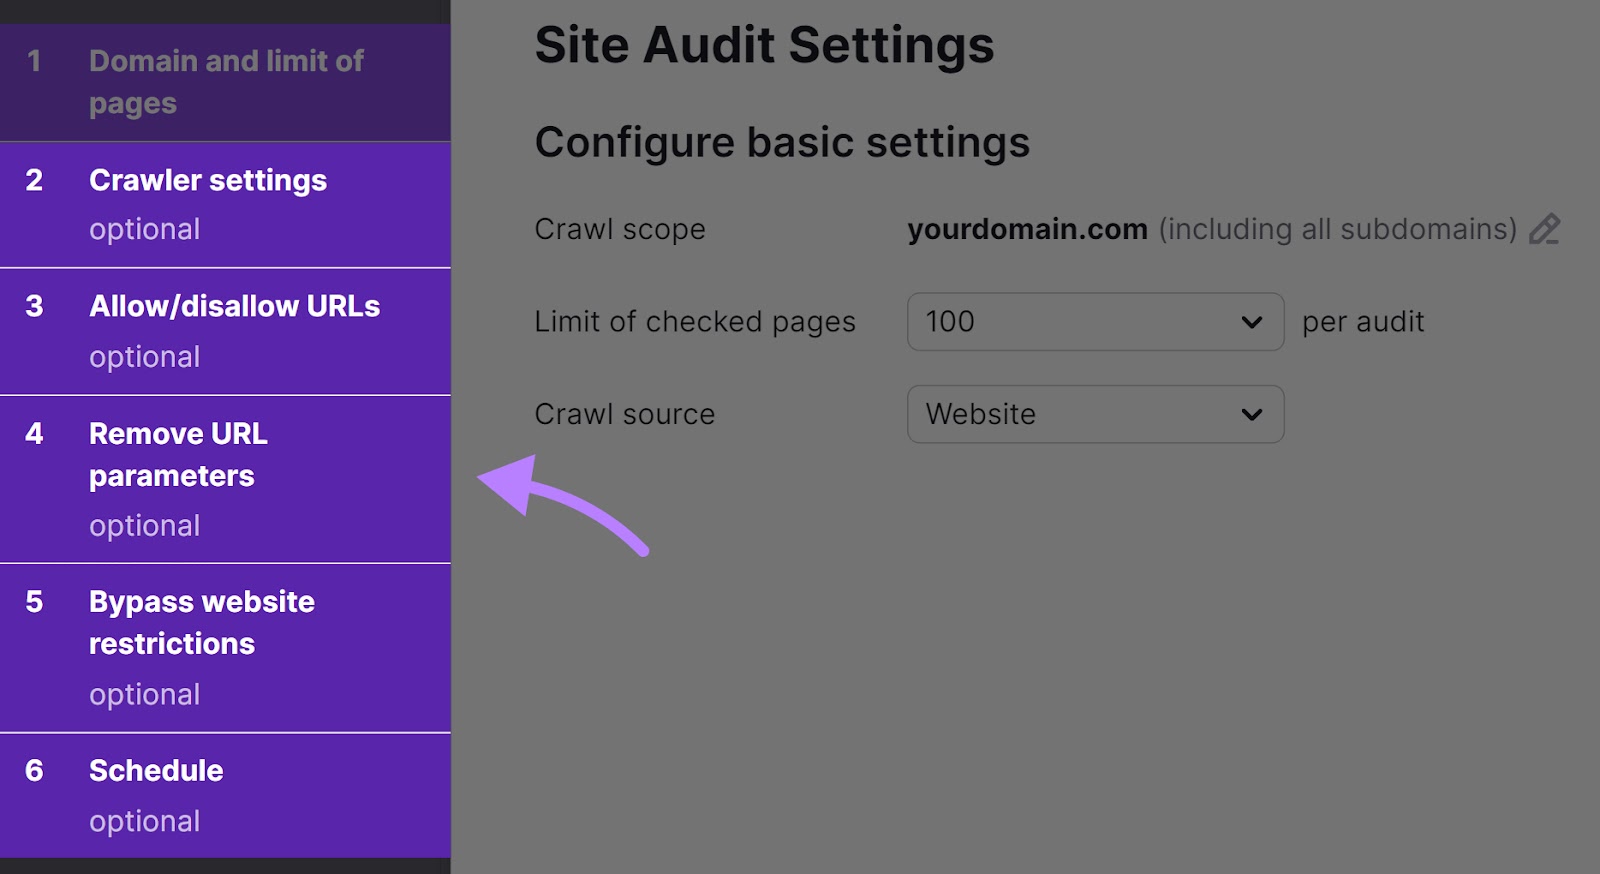 "Site Audit Settings" tabs